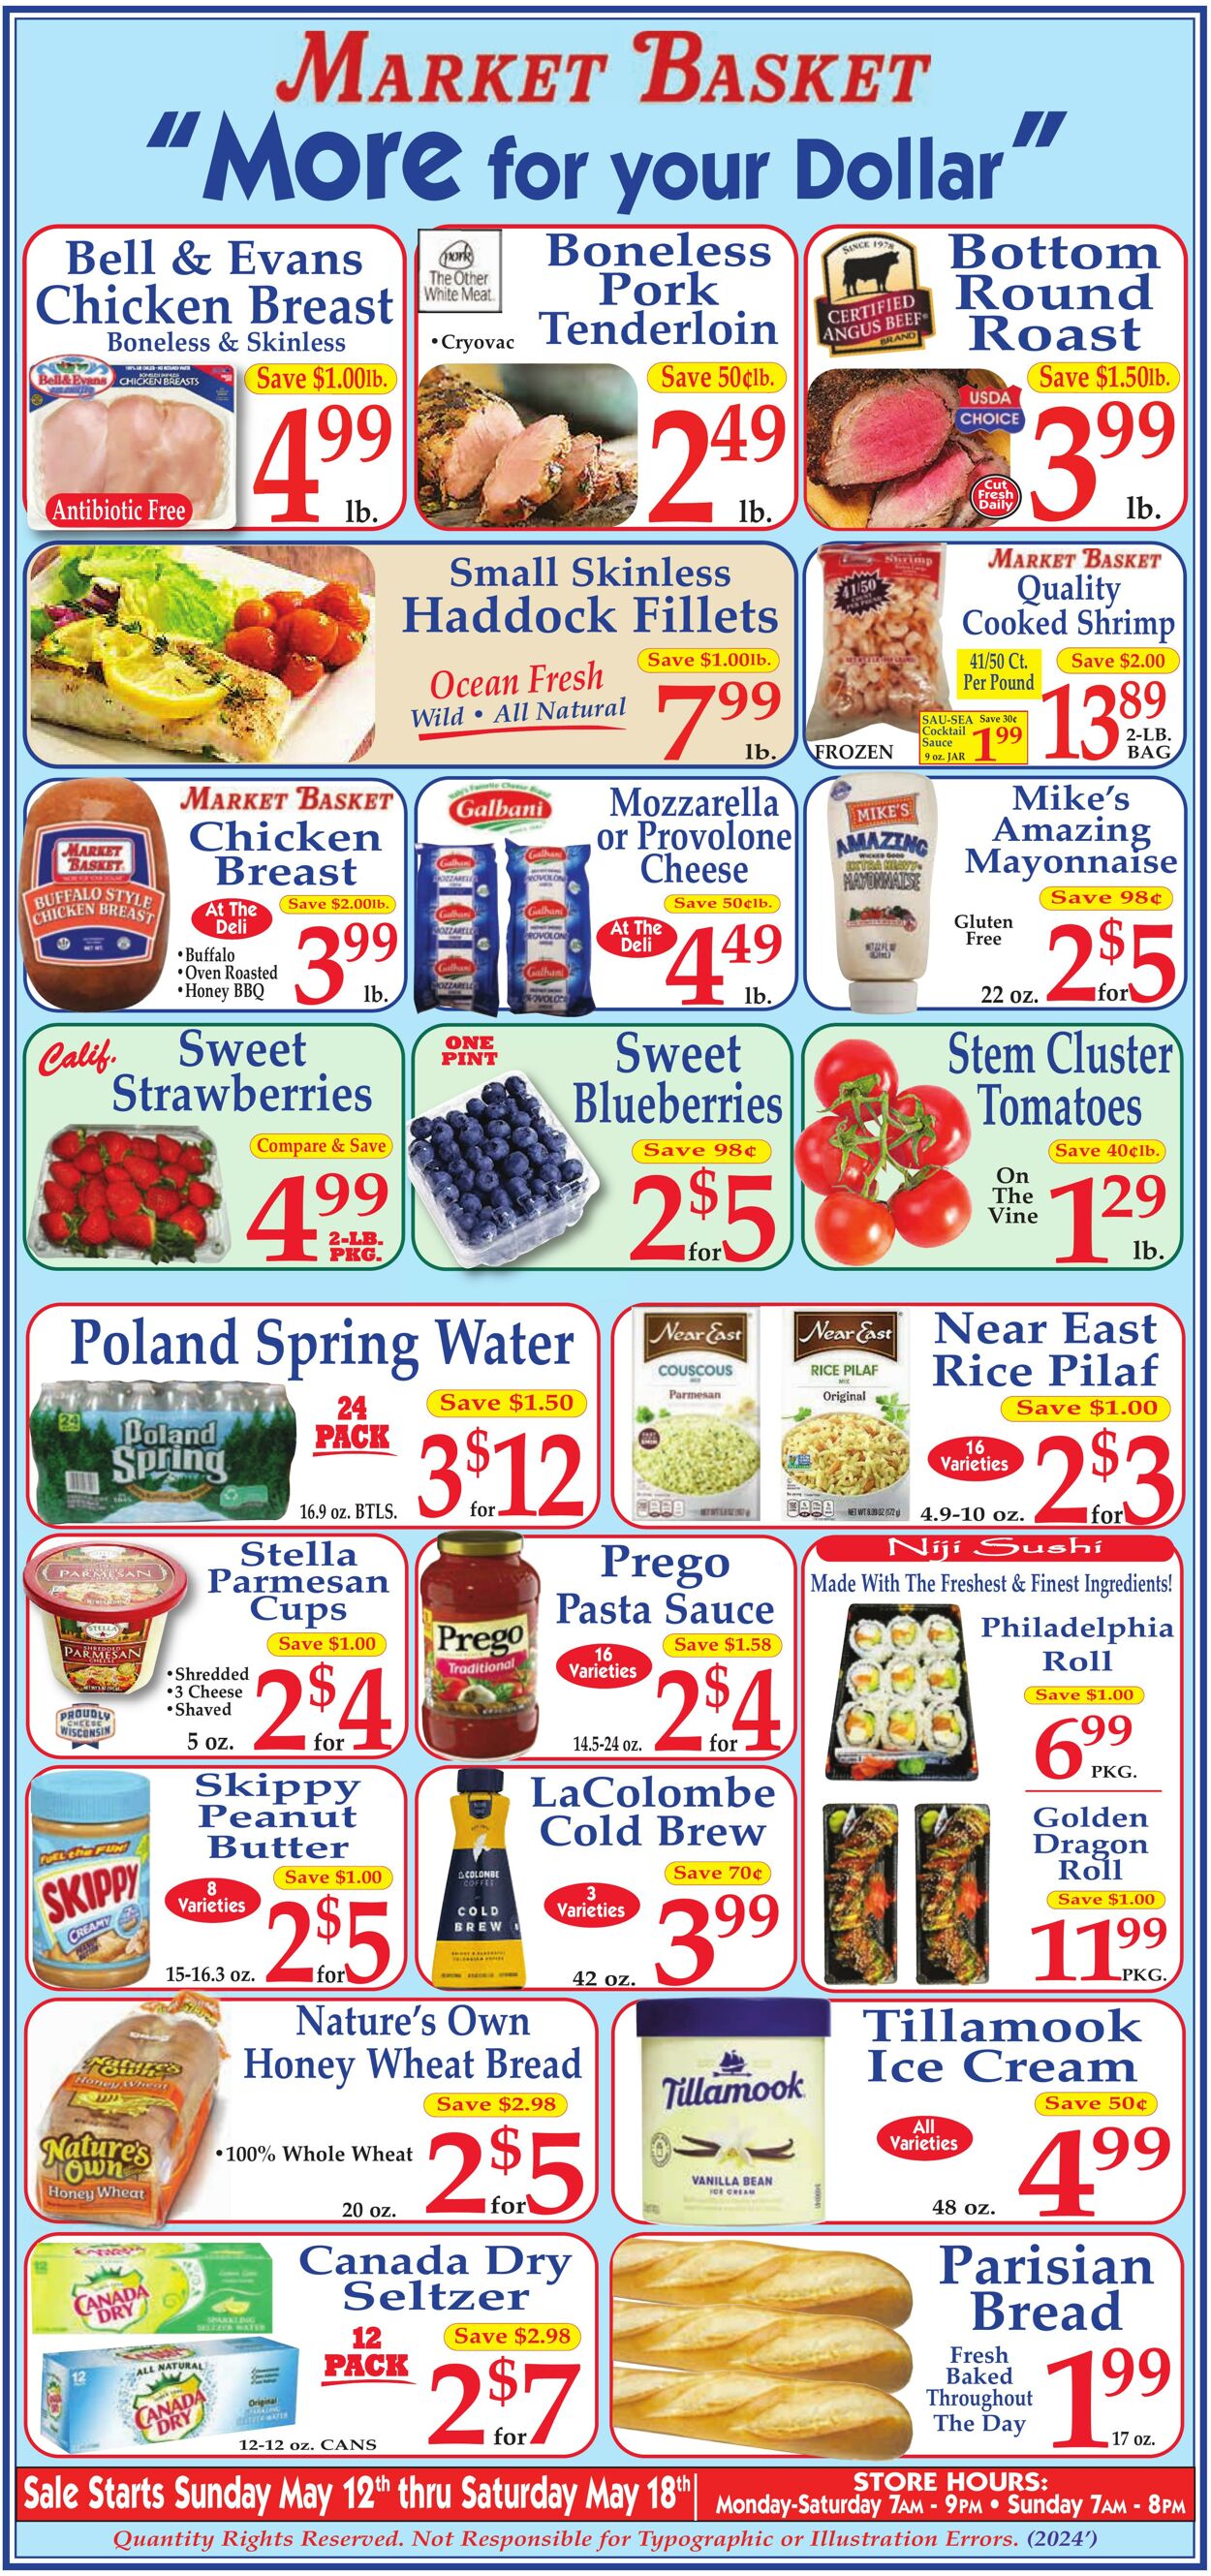 Market Basket Promotional weekly ads